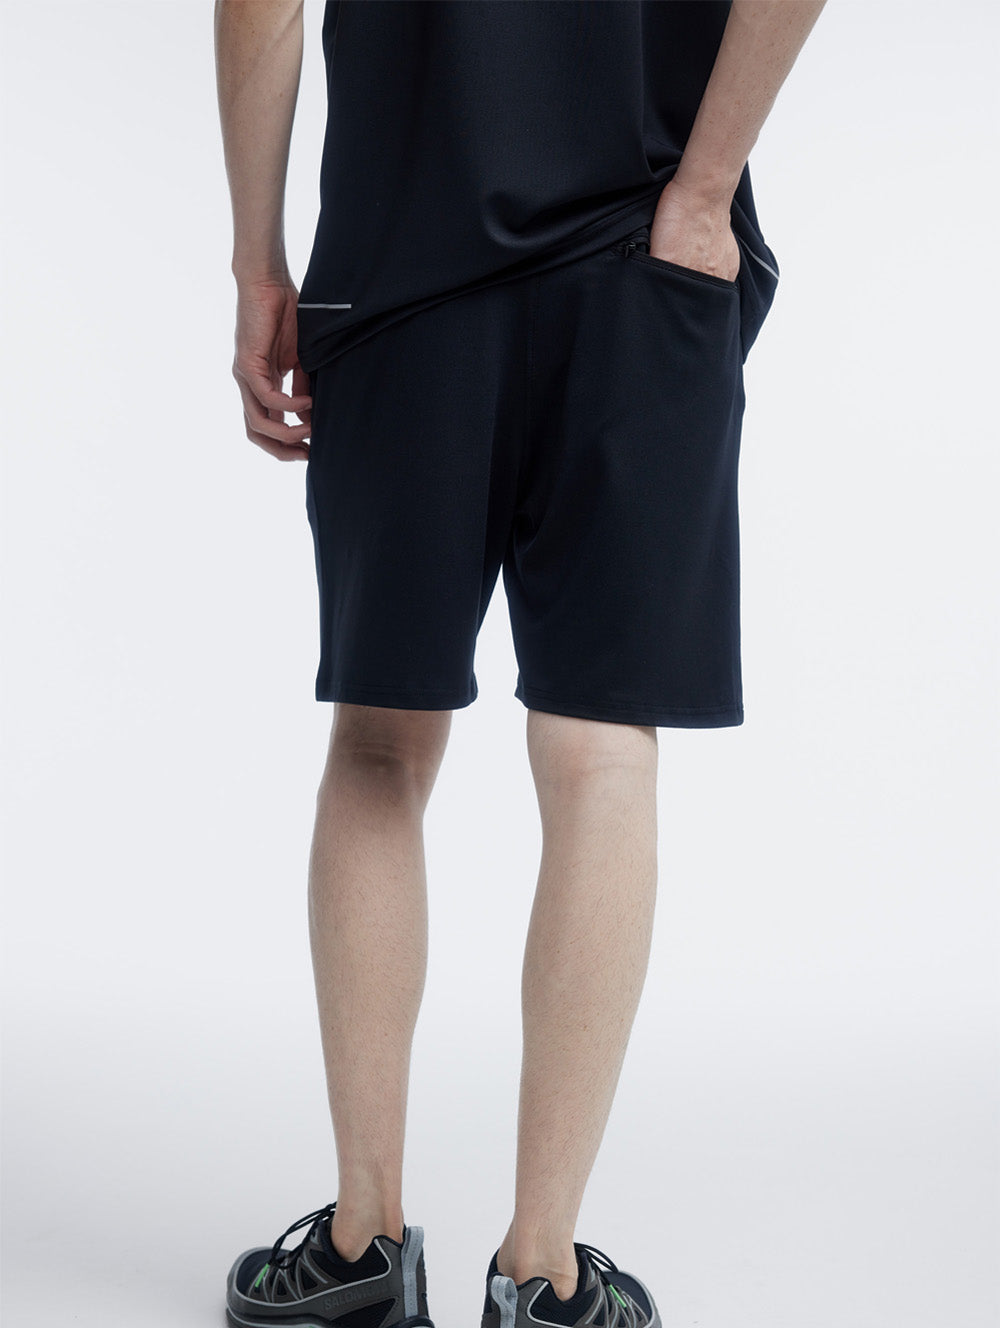 Sussex Super Soft Comfort Shorts - BMLH40601